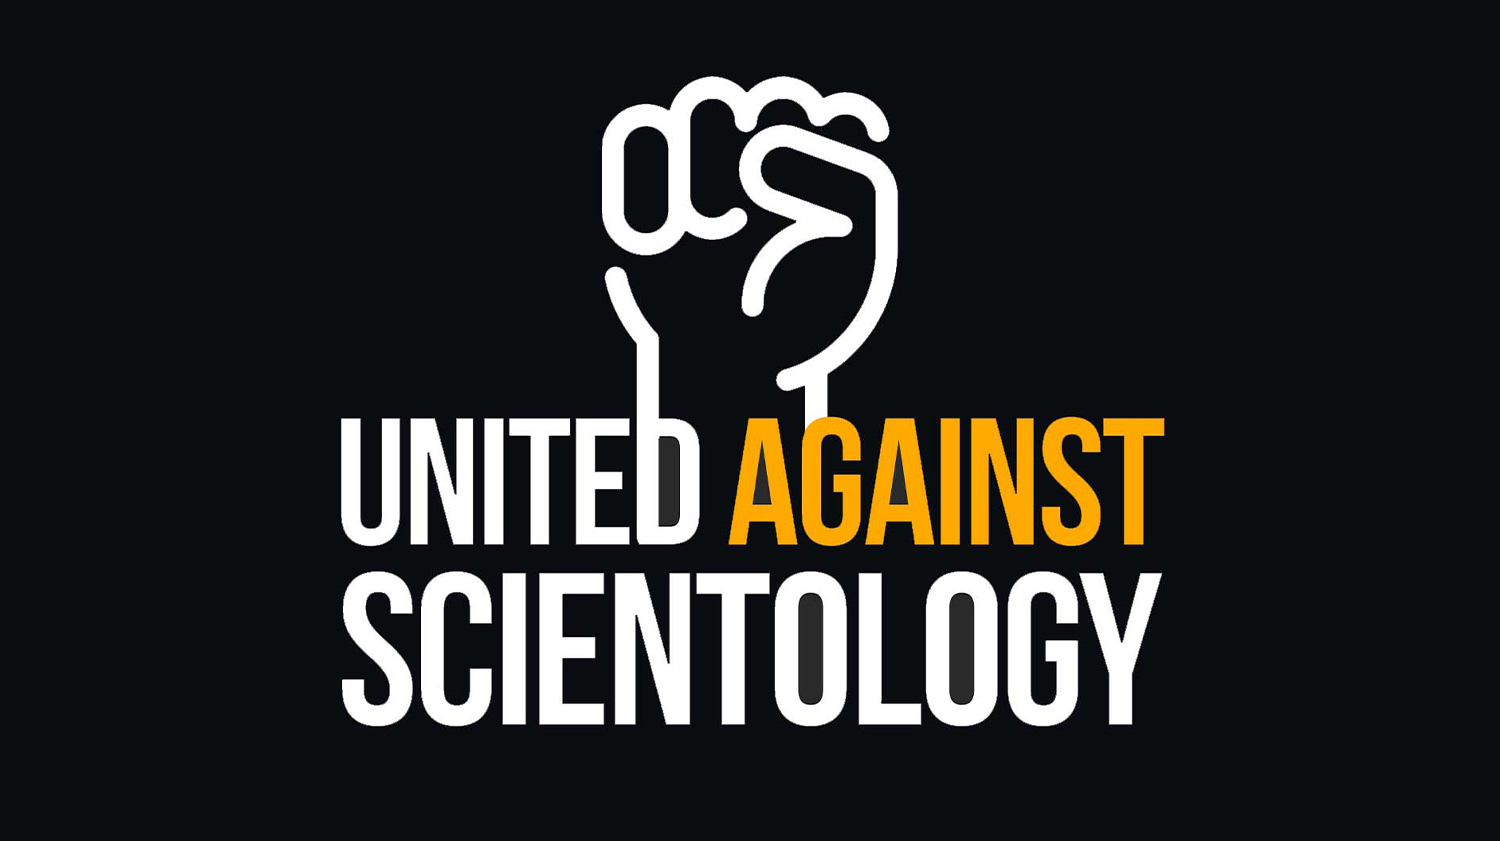 United Against Scientology